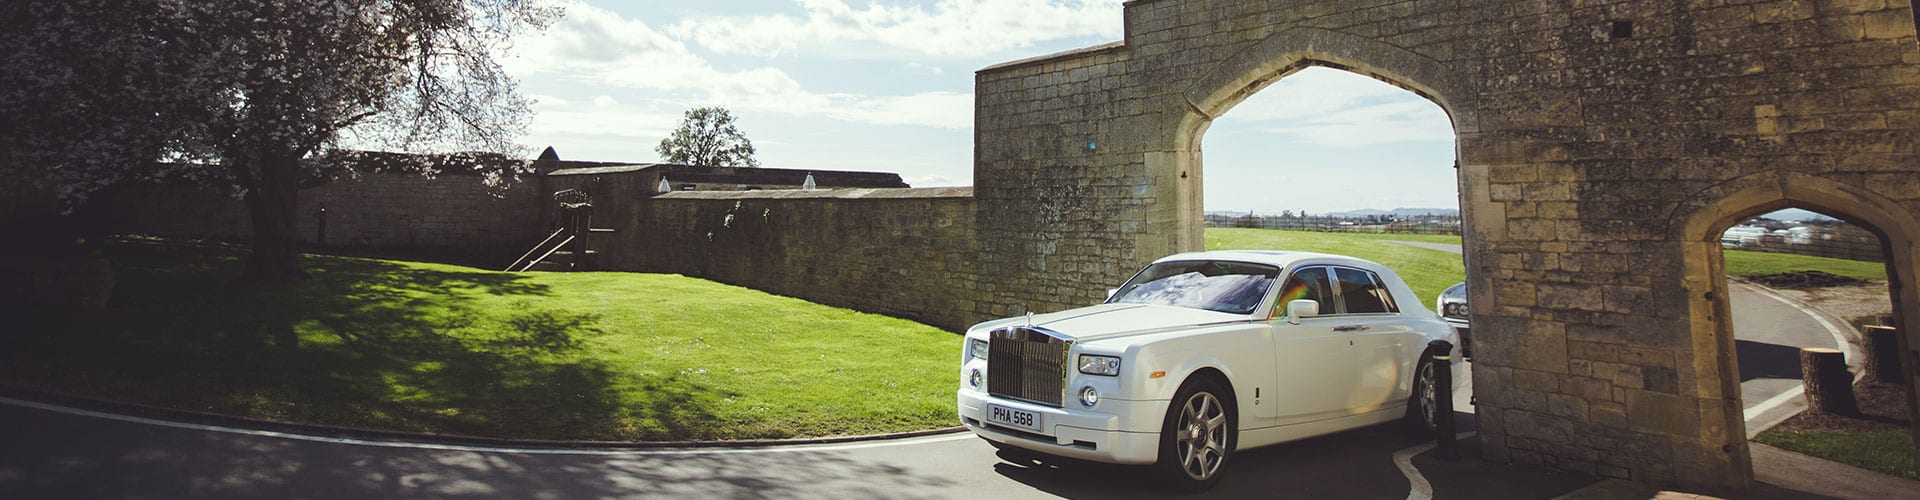 Rolls-Royce Phantom wedding car in pearlescent white